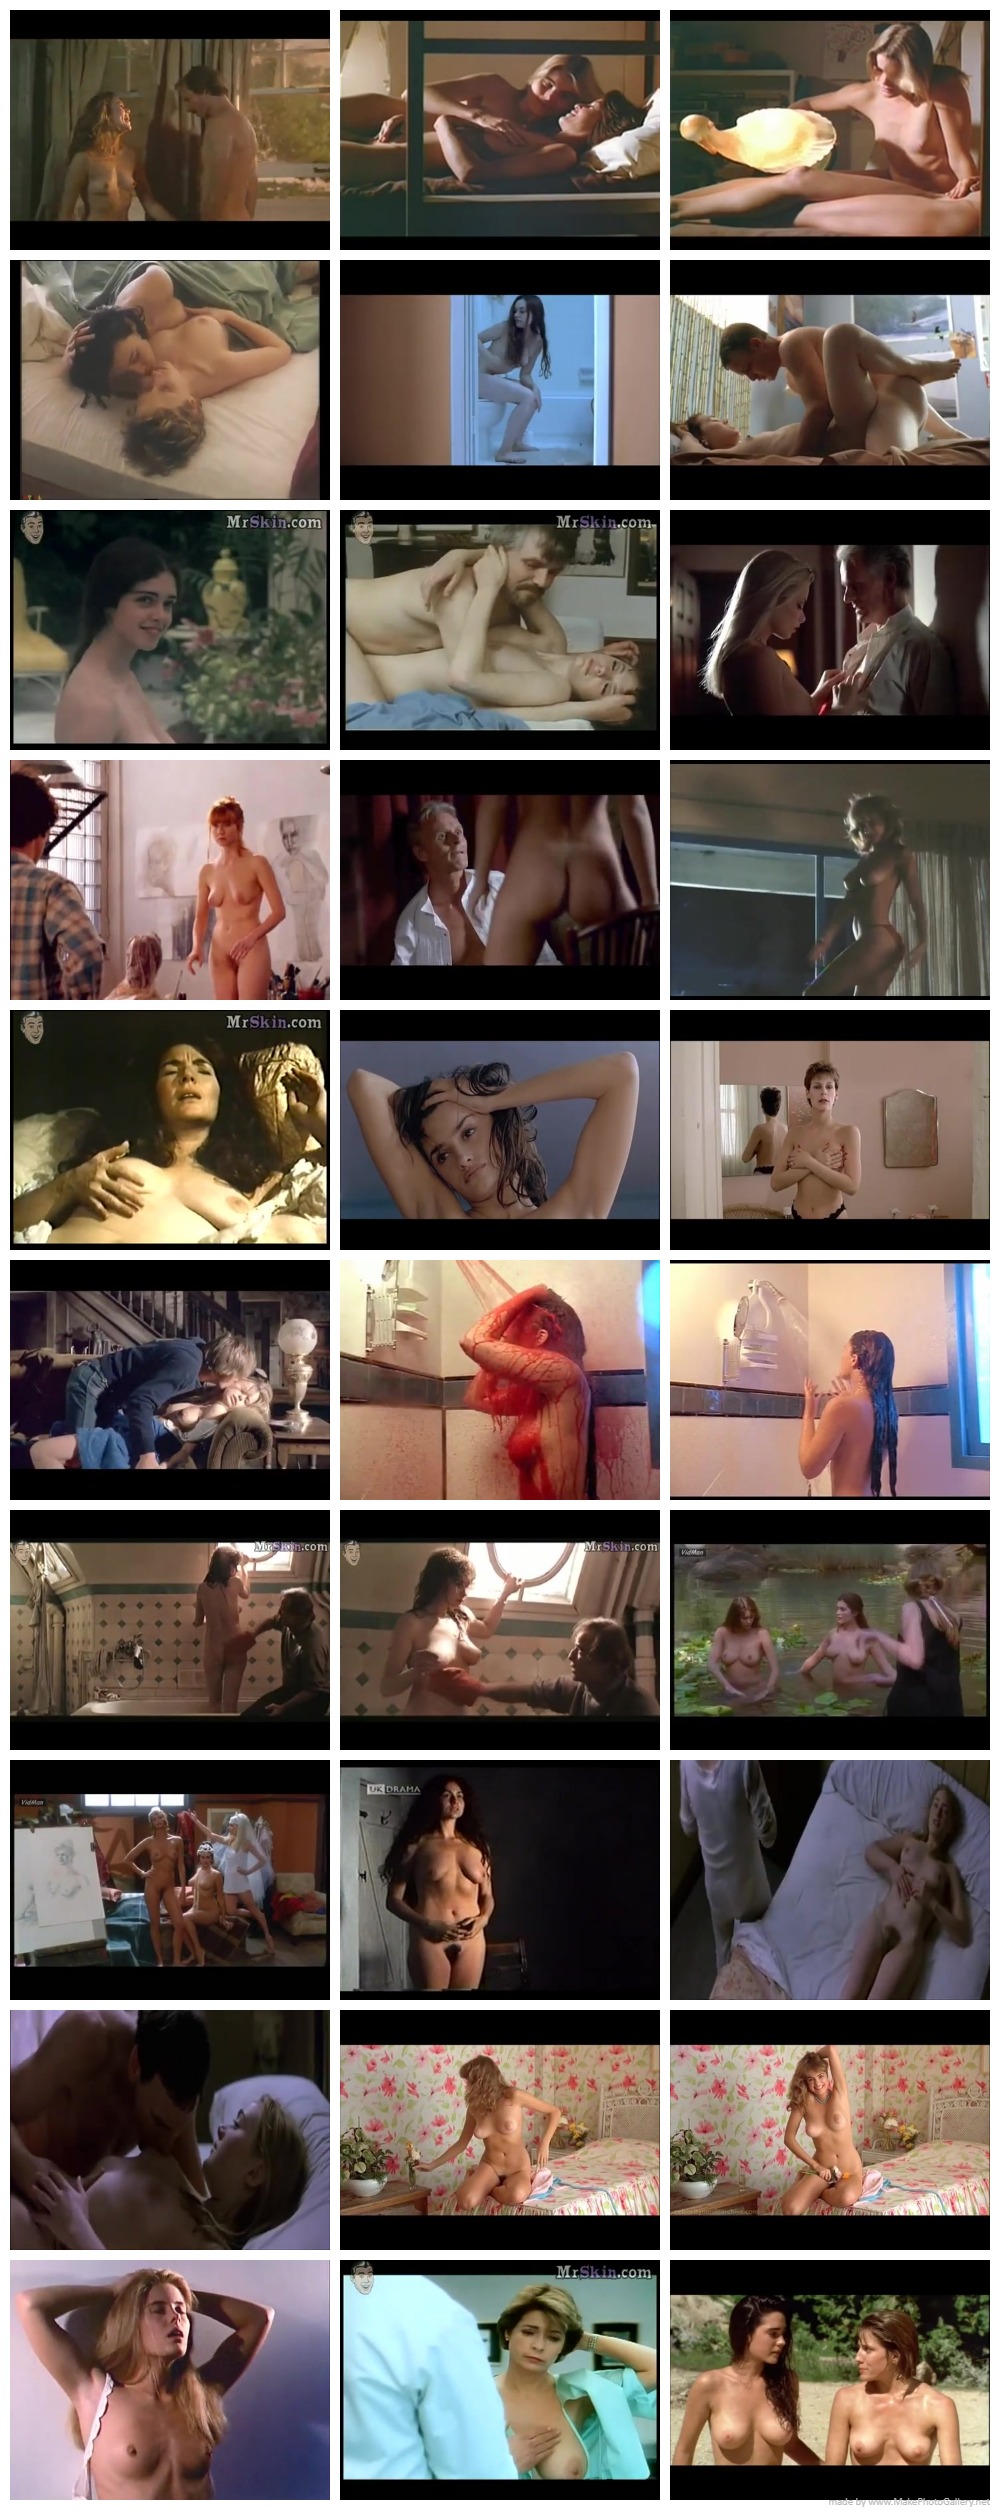 Free pics of naked movie stars sex scenes